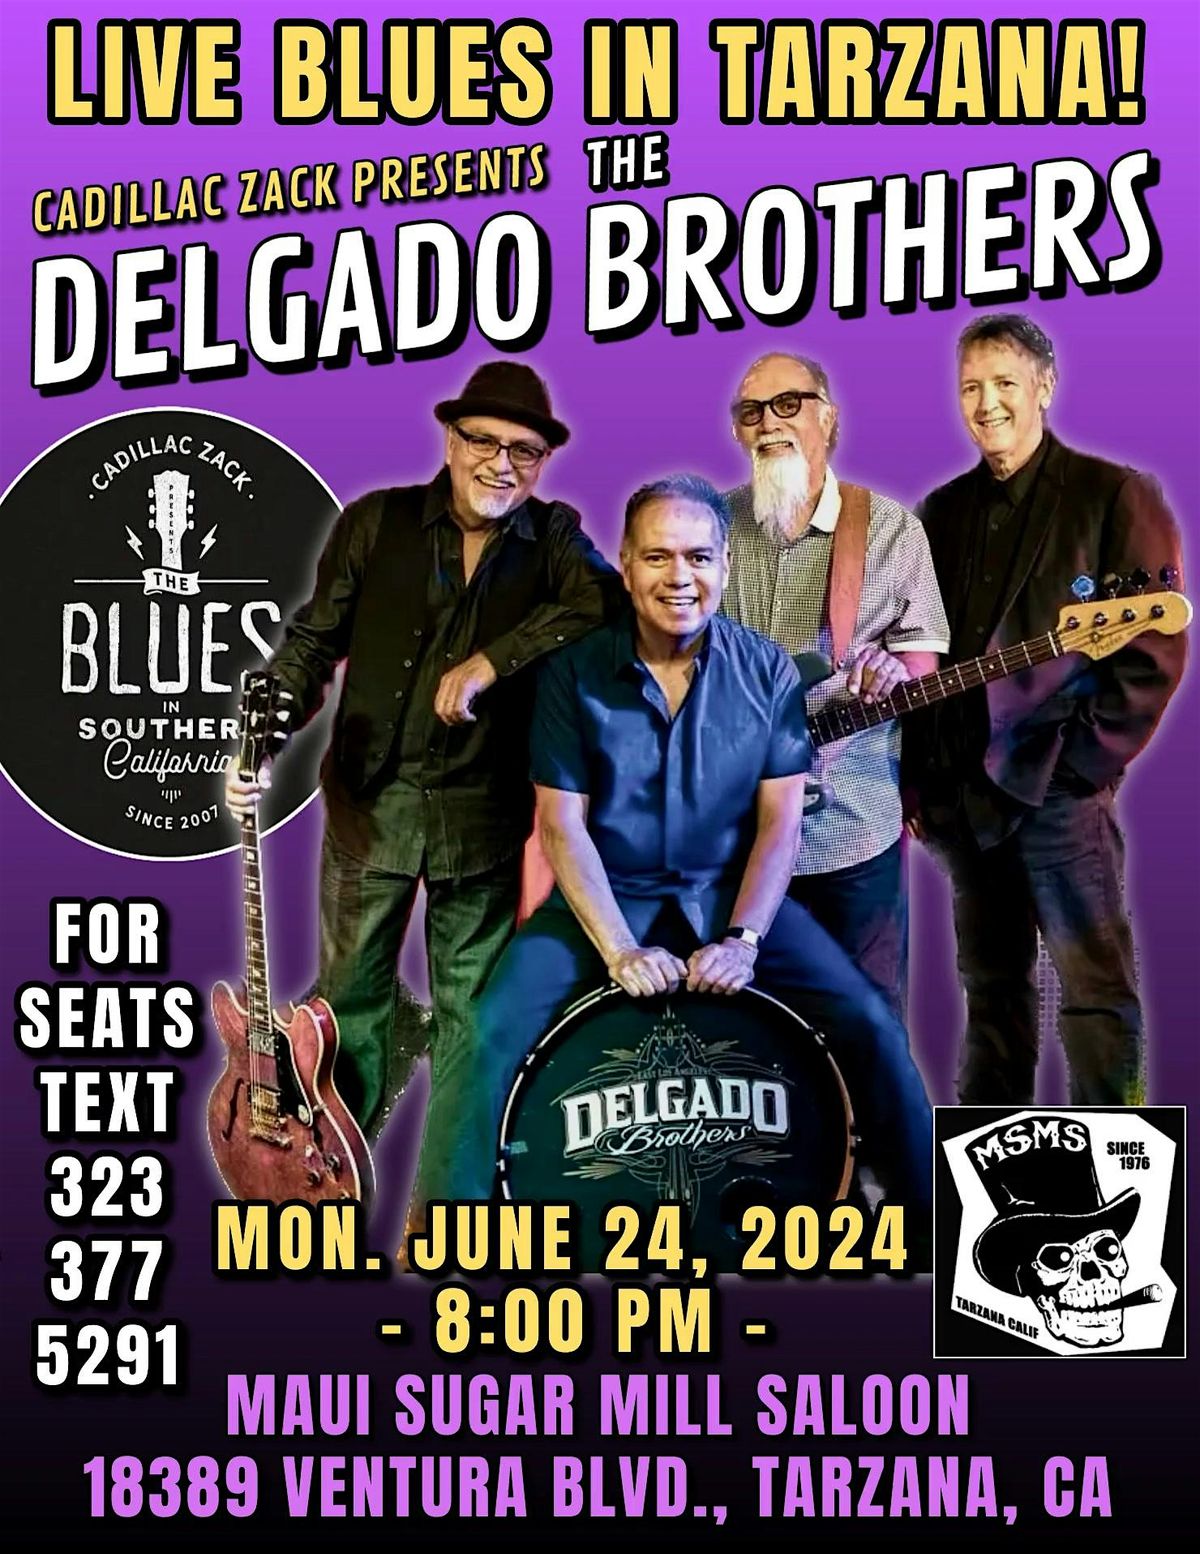 THE DELGADO BROTHERS - Los Angeles Blues & Soul Legends  - in Tarzana!